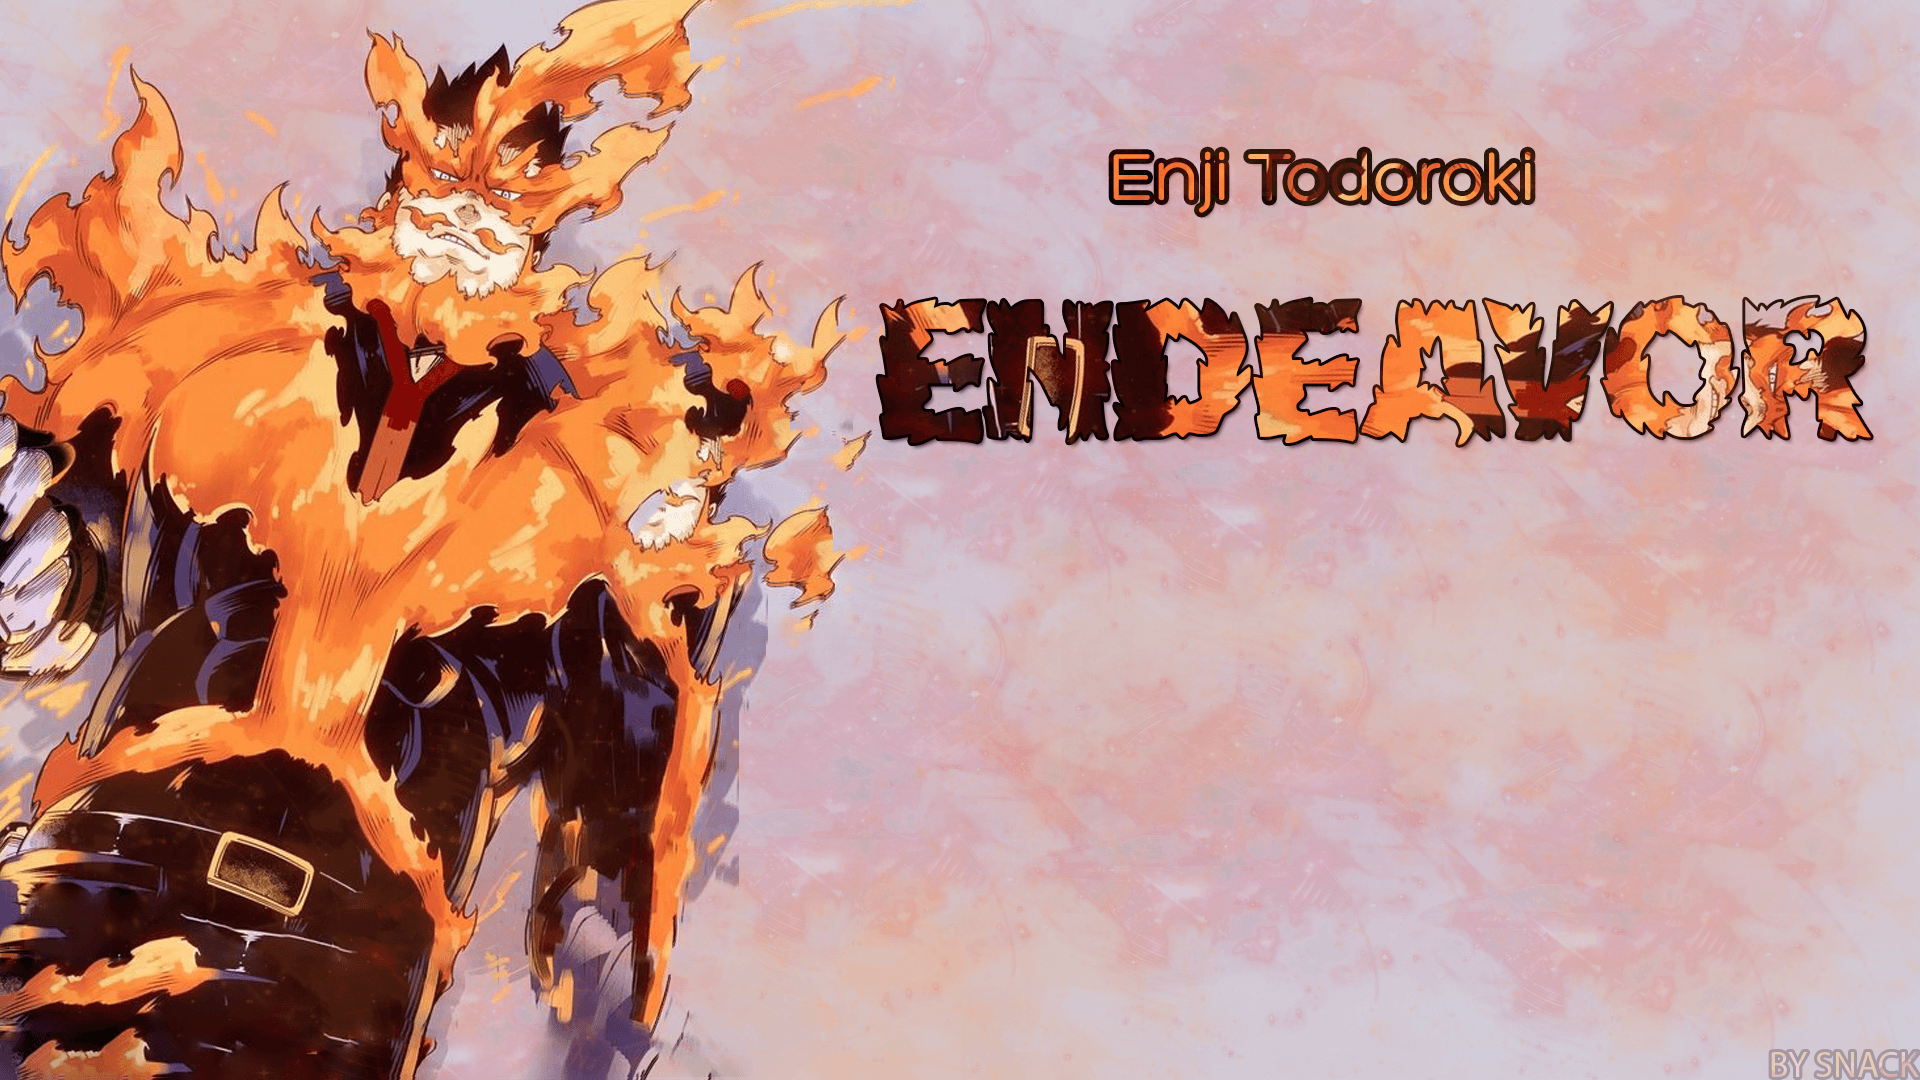 ENJI ENDEAVOR TODOROKI. Endeavor Enji Todoroki wallpaper